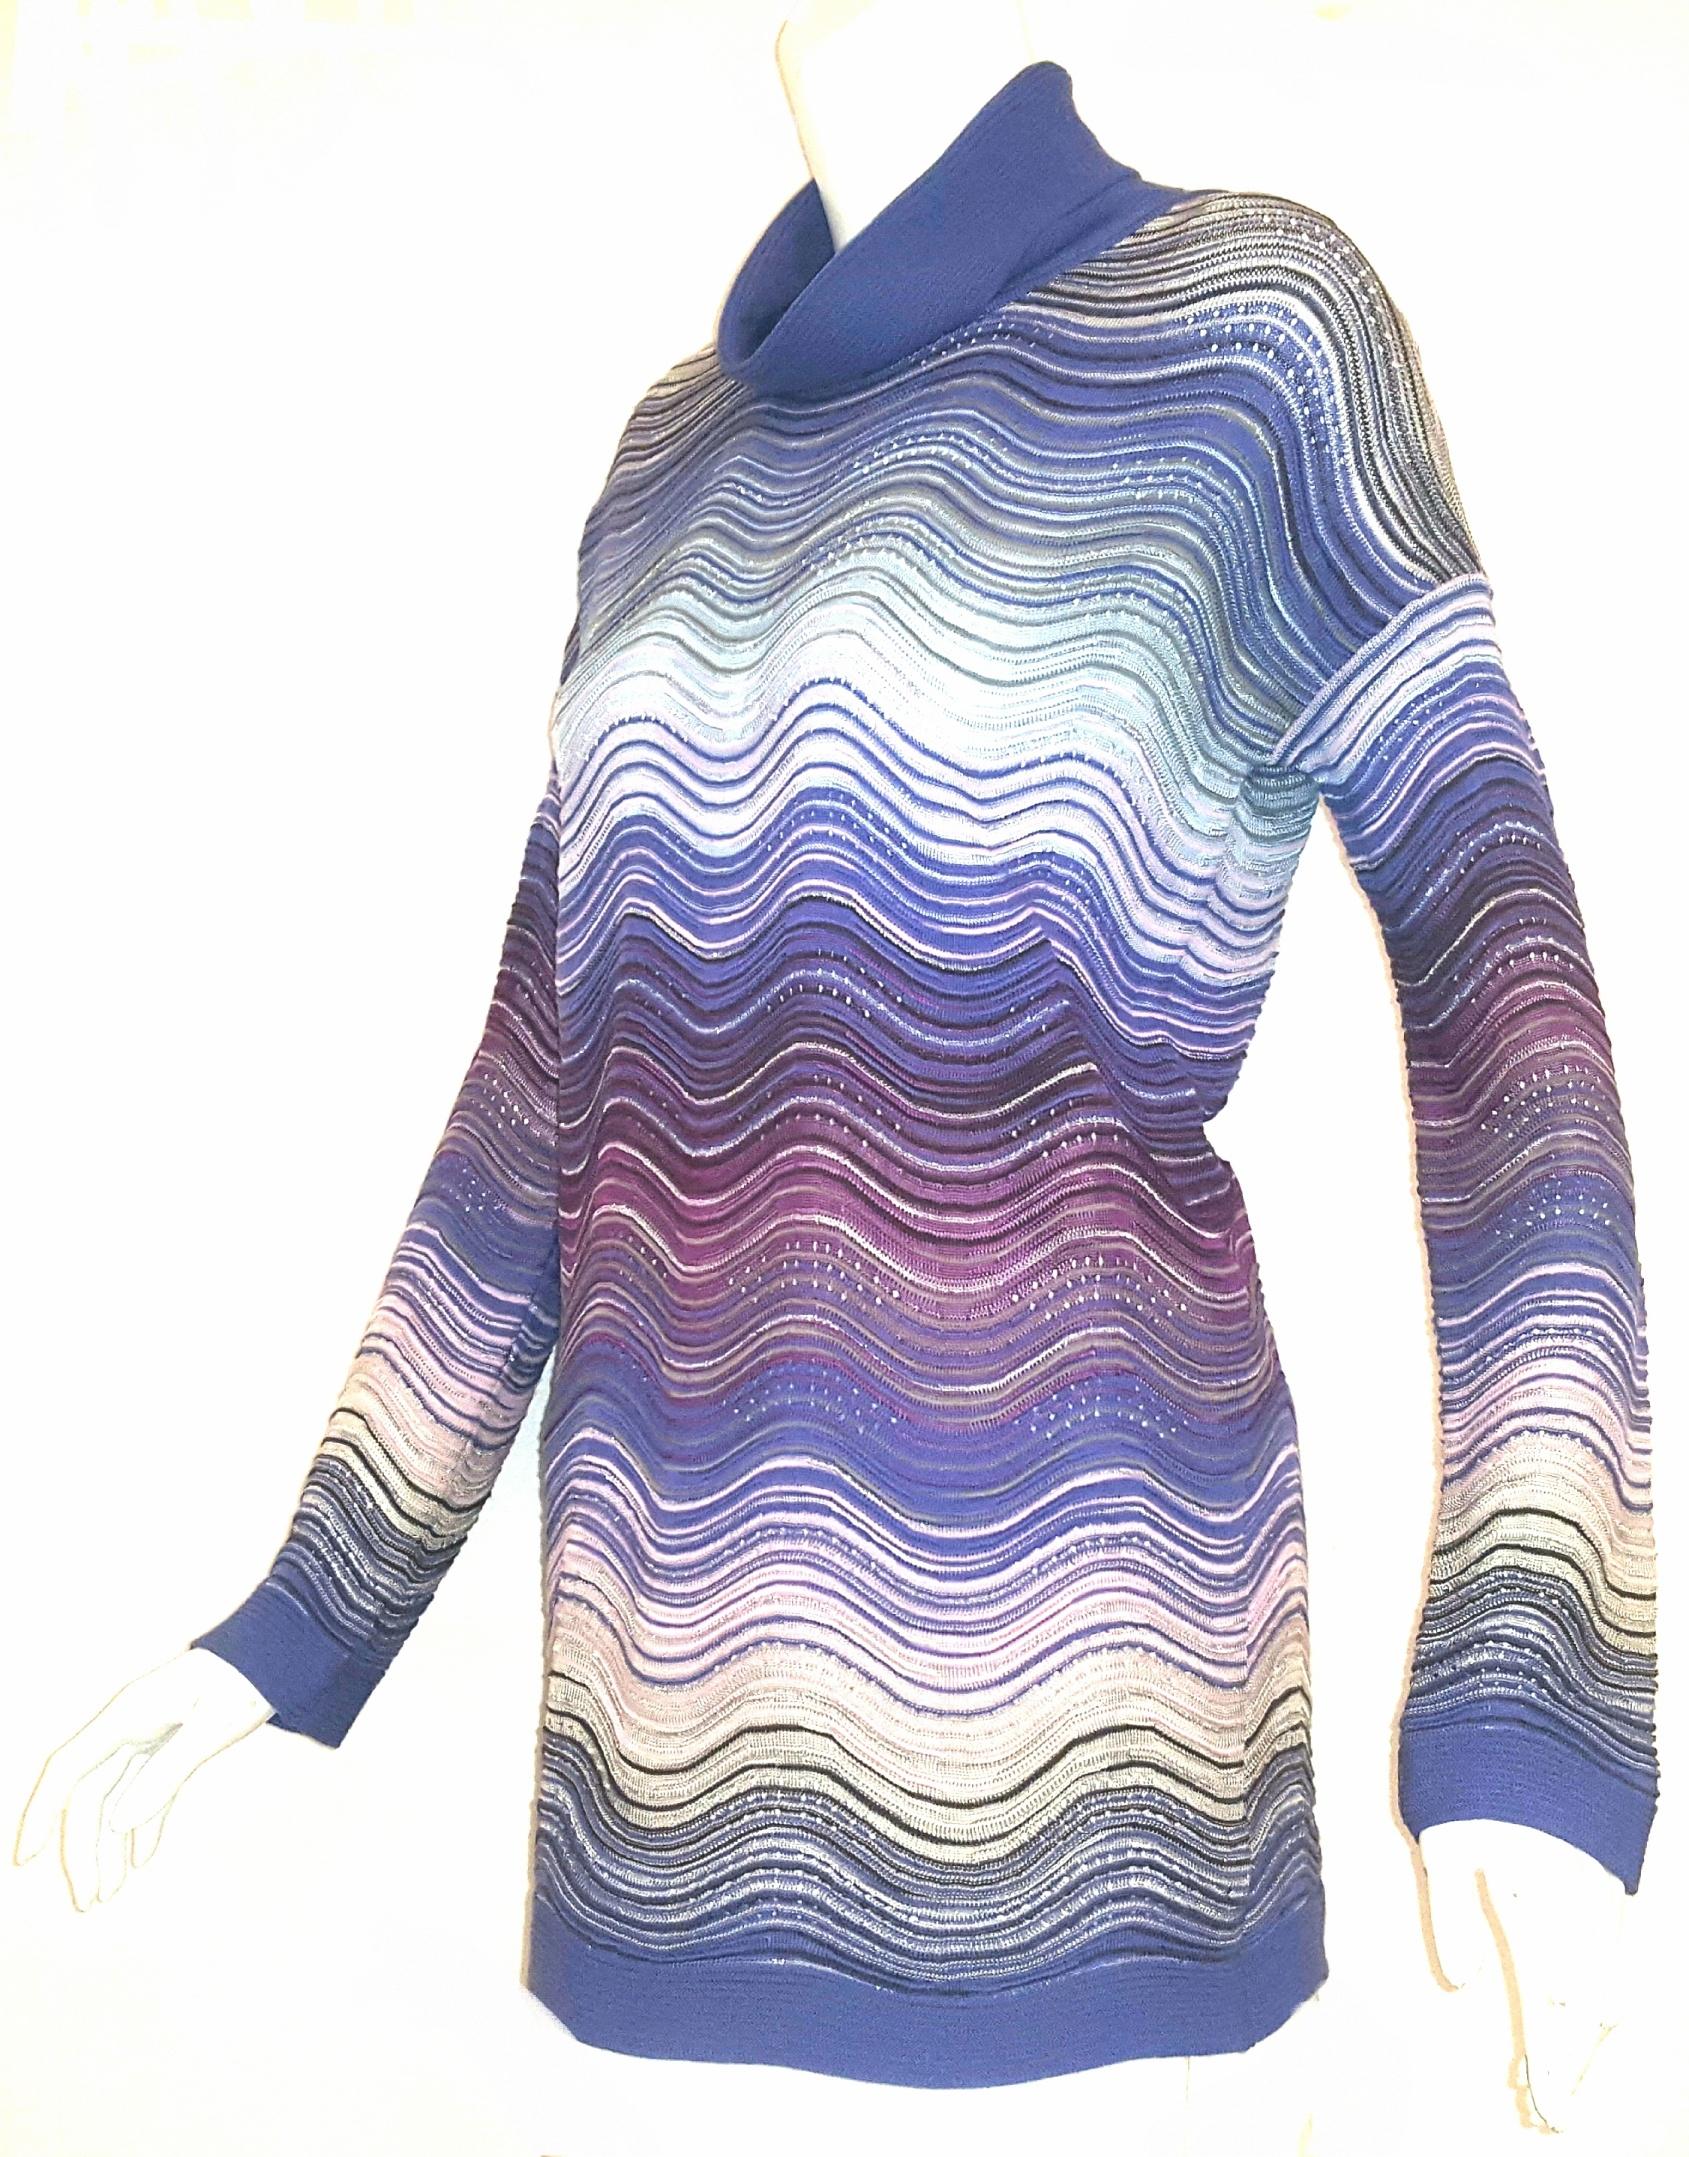 Missoni Multi Color Metallic Wave Design Turtleneck Sweater In Excellent Condition For Sale In Palm Beach, FL